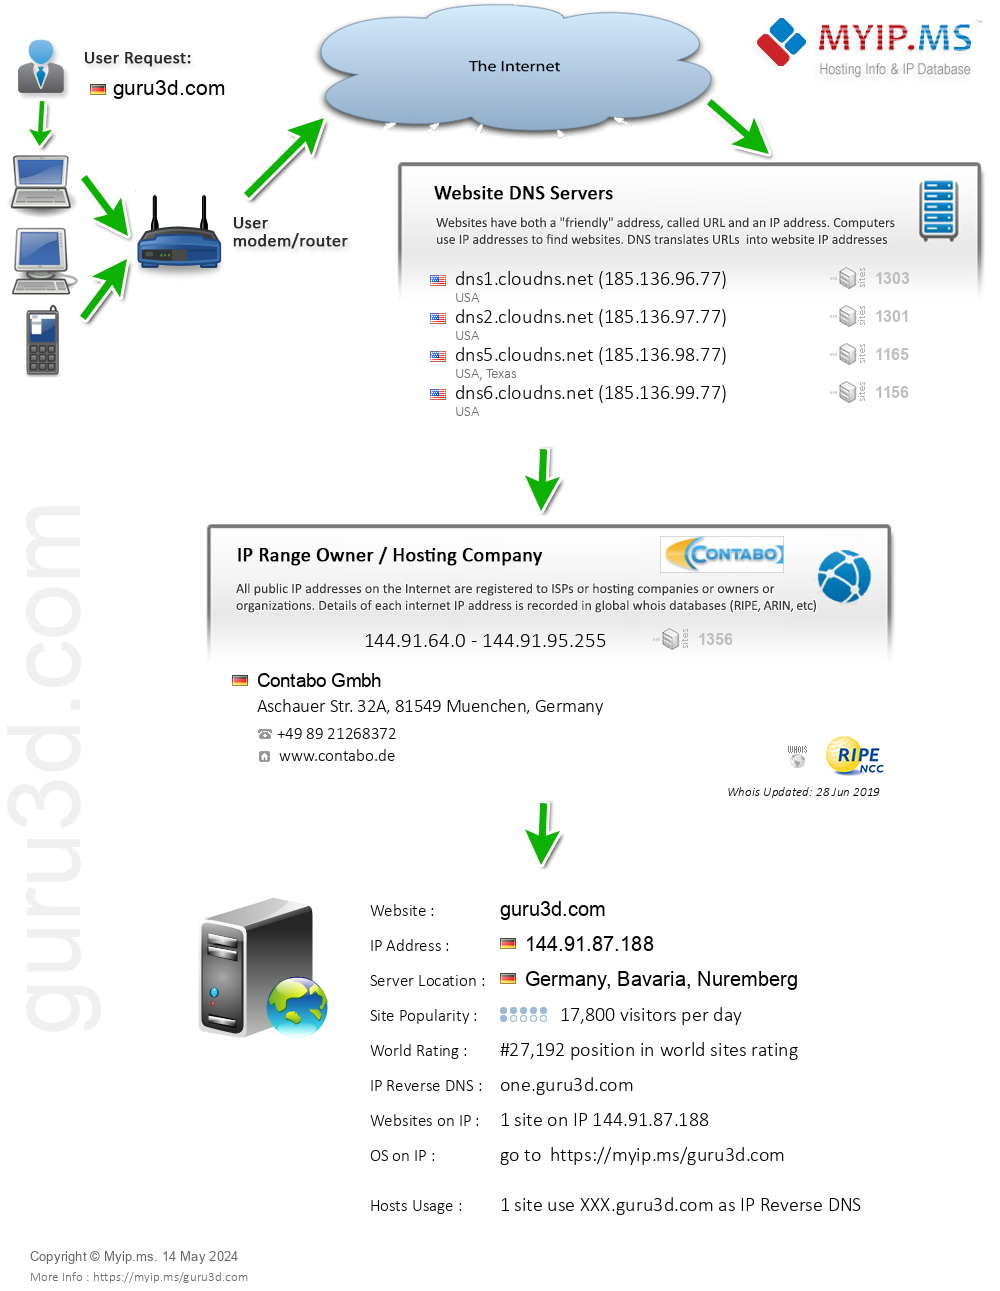 Guru3d.com - Website Hosting Visual IP Diagram